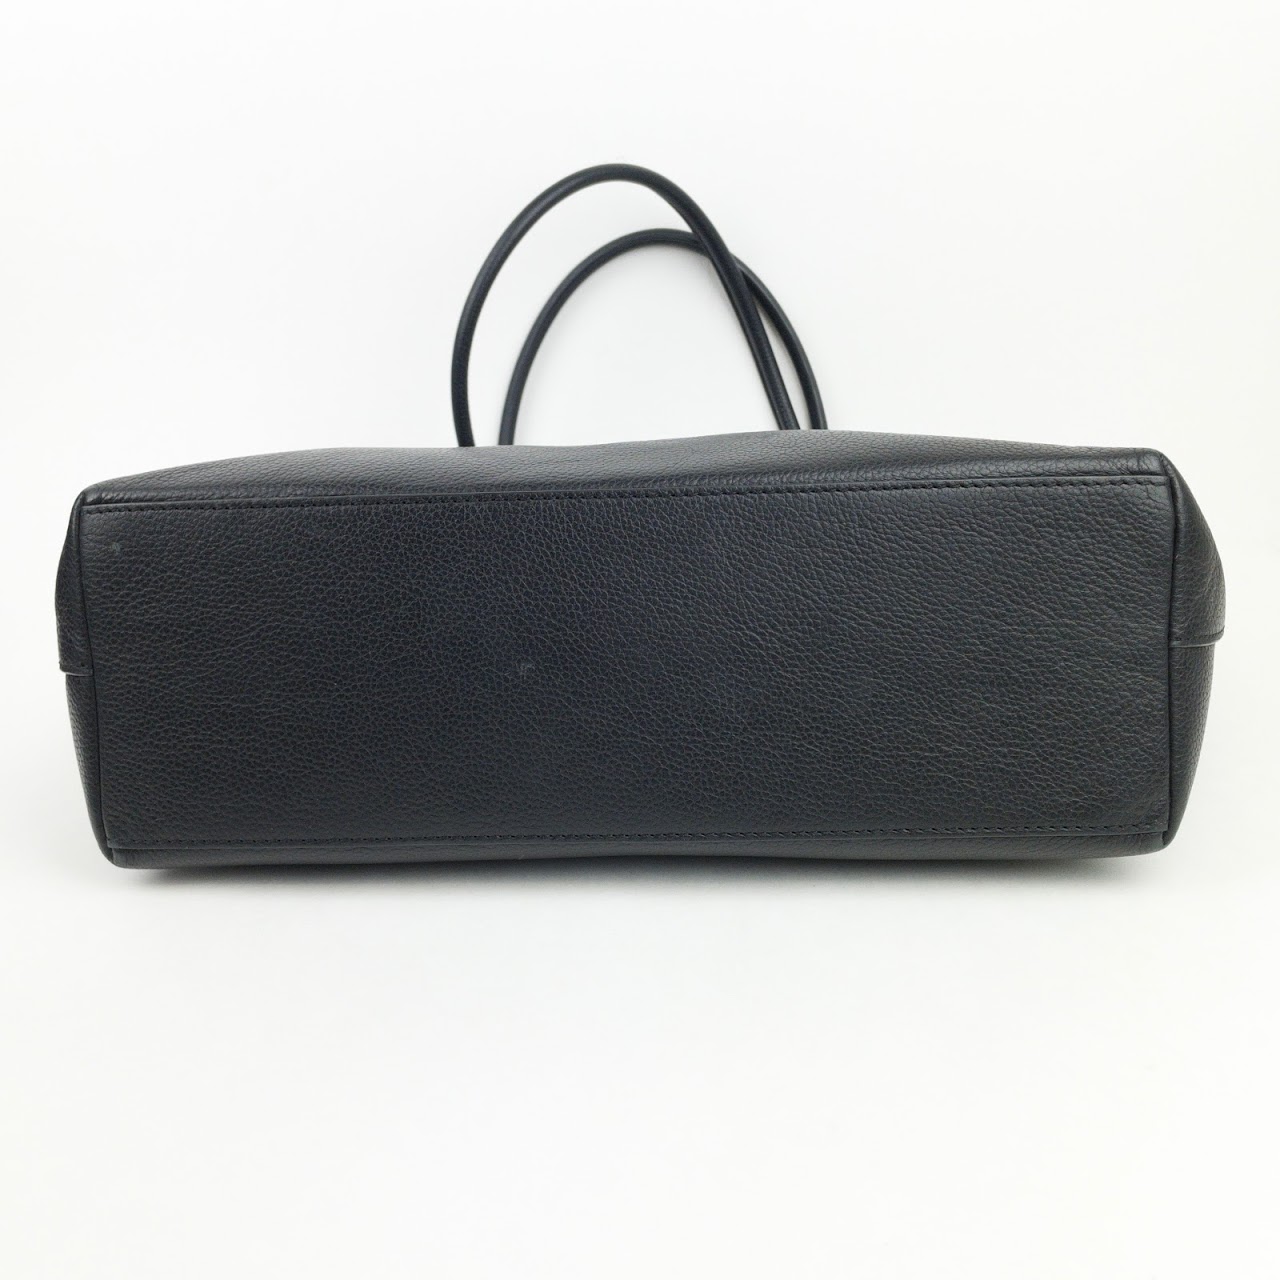 Linjer Black The Soft Tote Bag